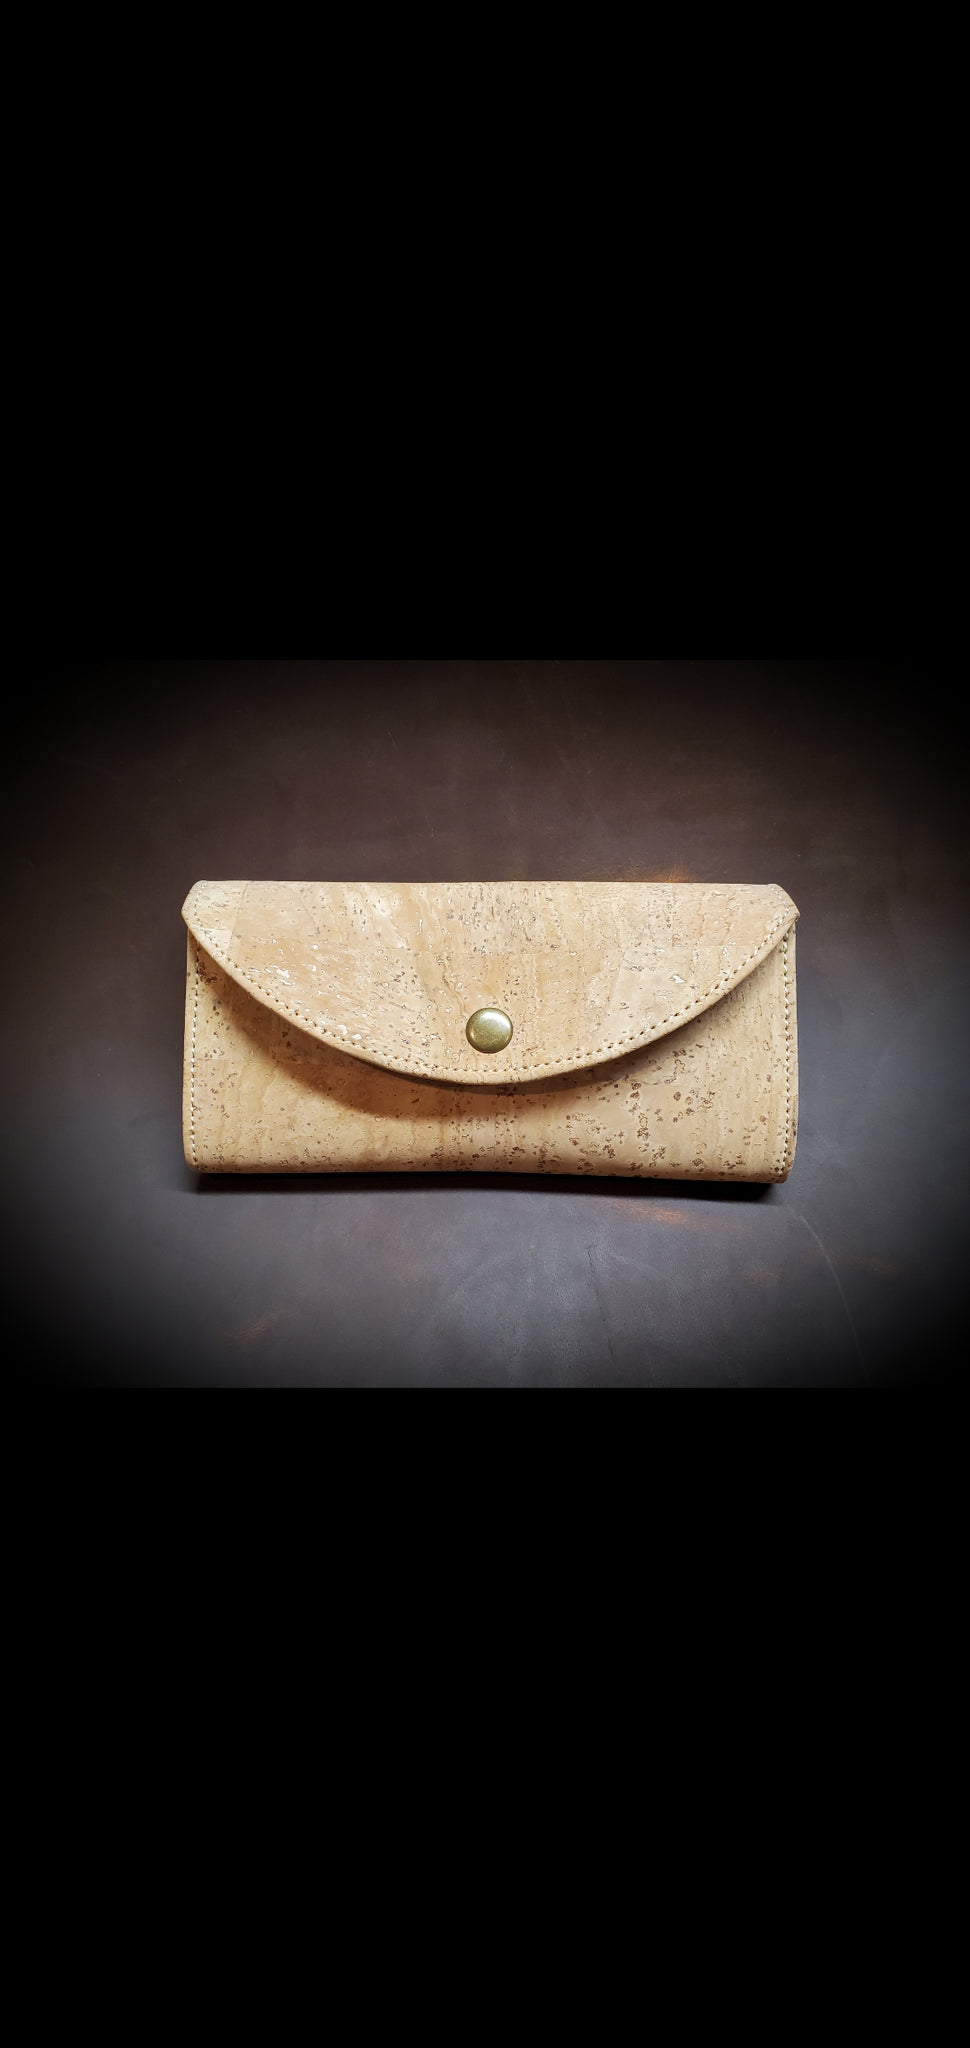 3Pcs/Set Soft PU Leather Handbag Shoulder Bag Tote Purse Wallet Clutch  Crossbody | eBay